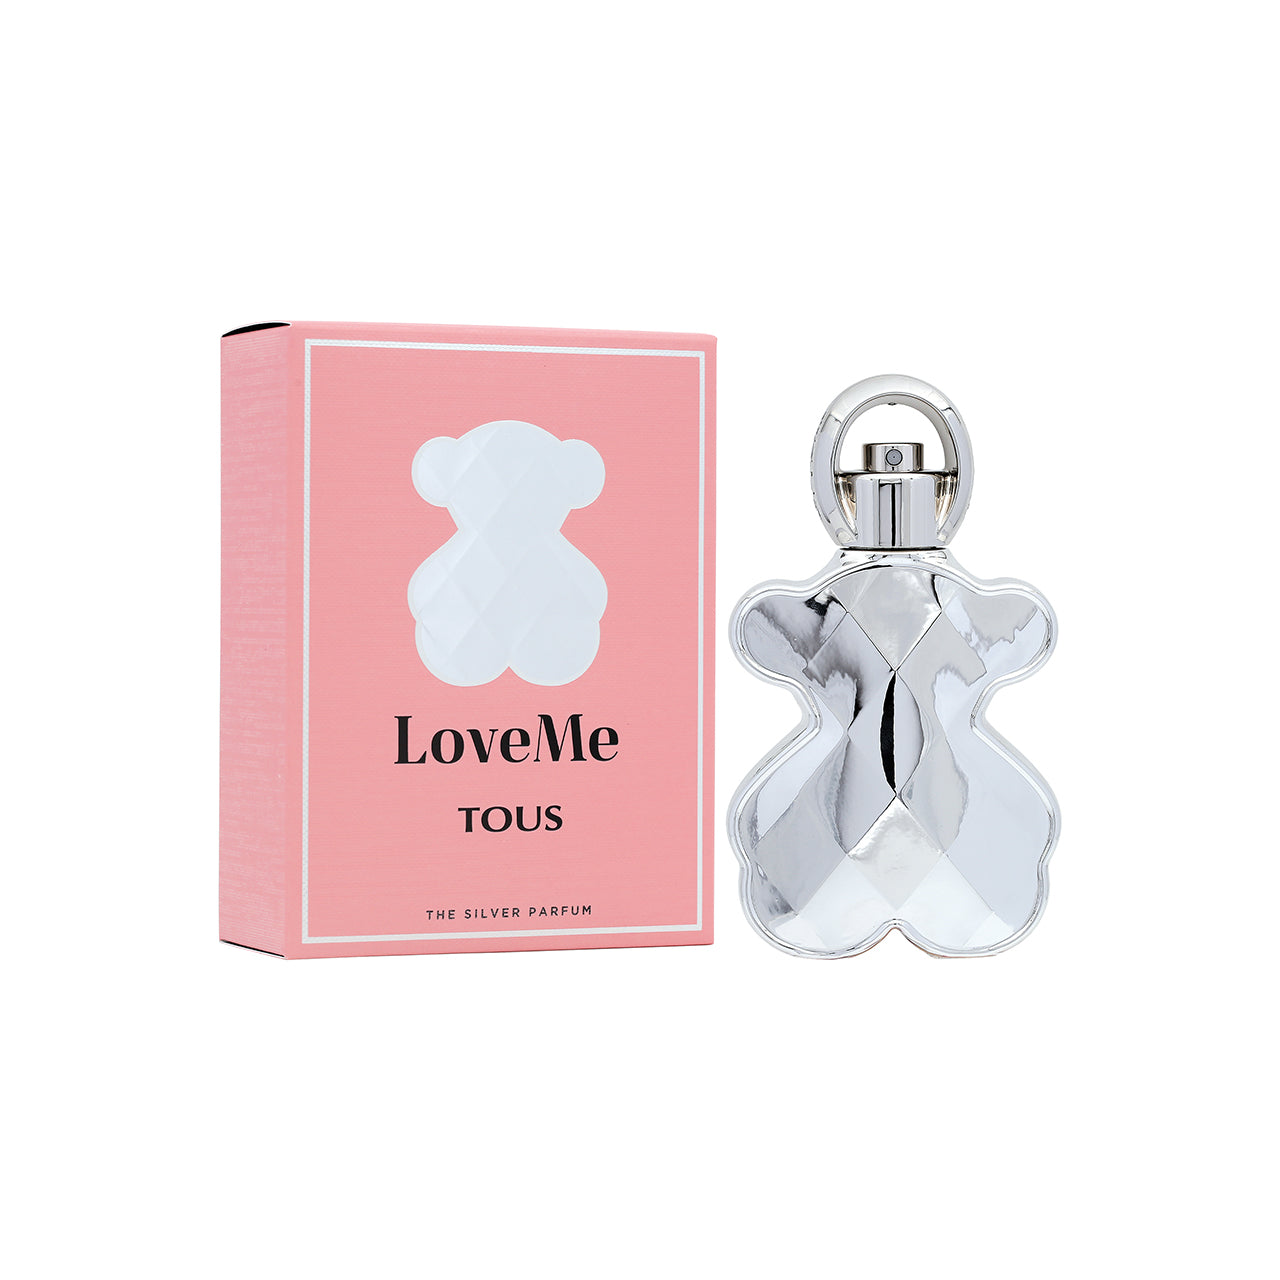 Tous LoveMe The Silver Parfum 50ml | Sasa Global eShop